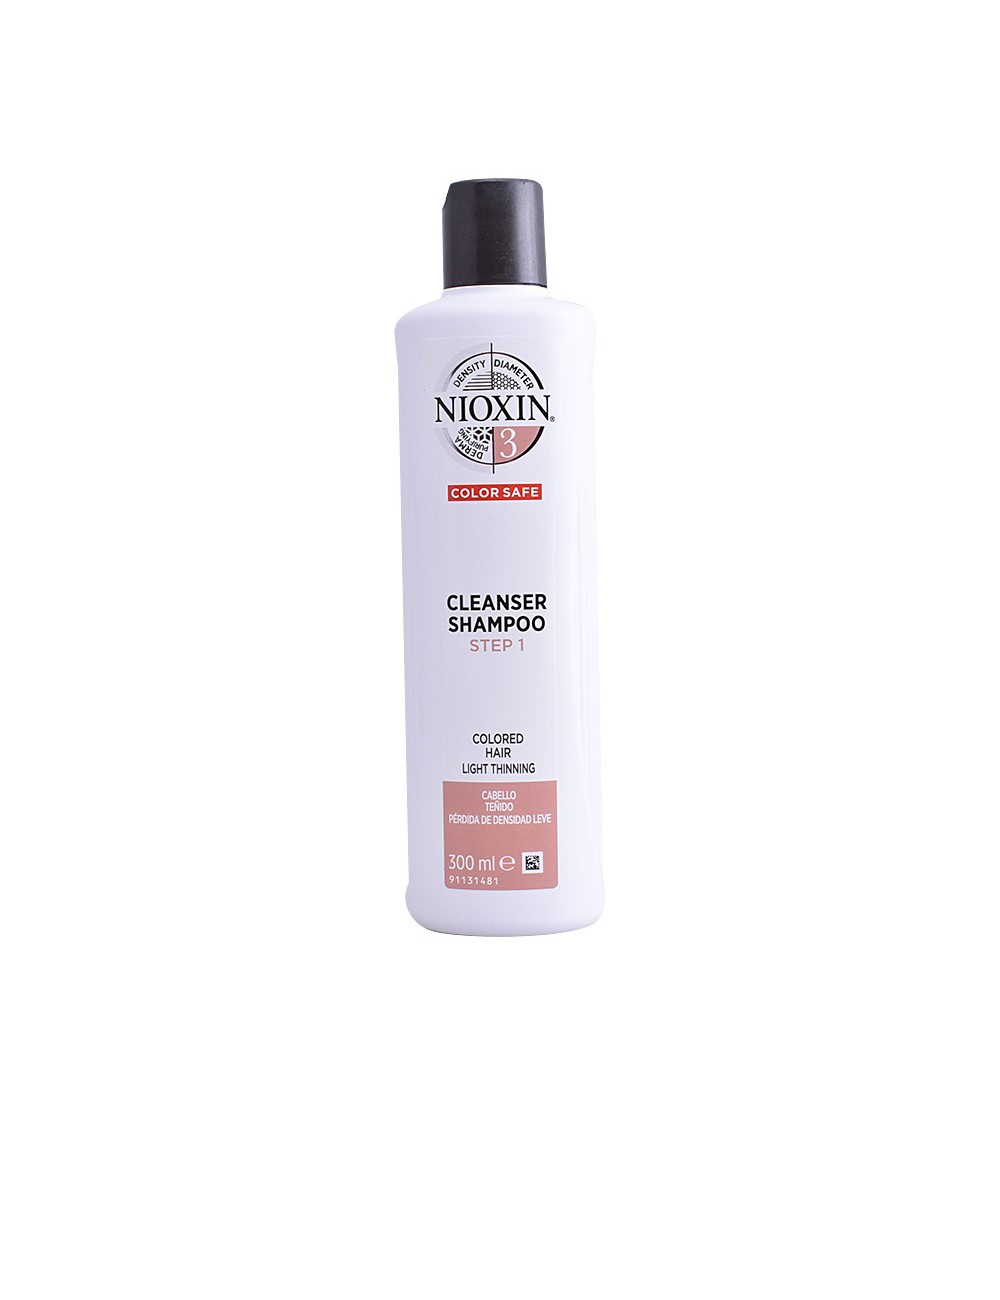 SYSTEM 3 shampooing volumisant pour cheveux fins 300 ml NE106821